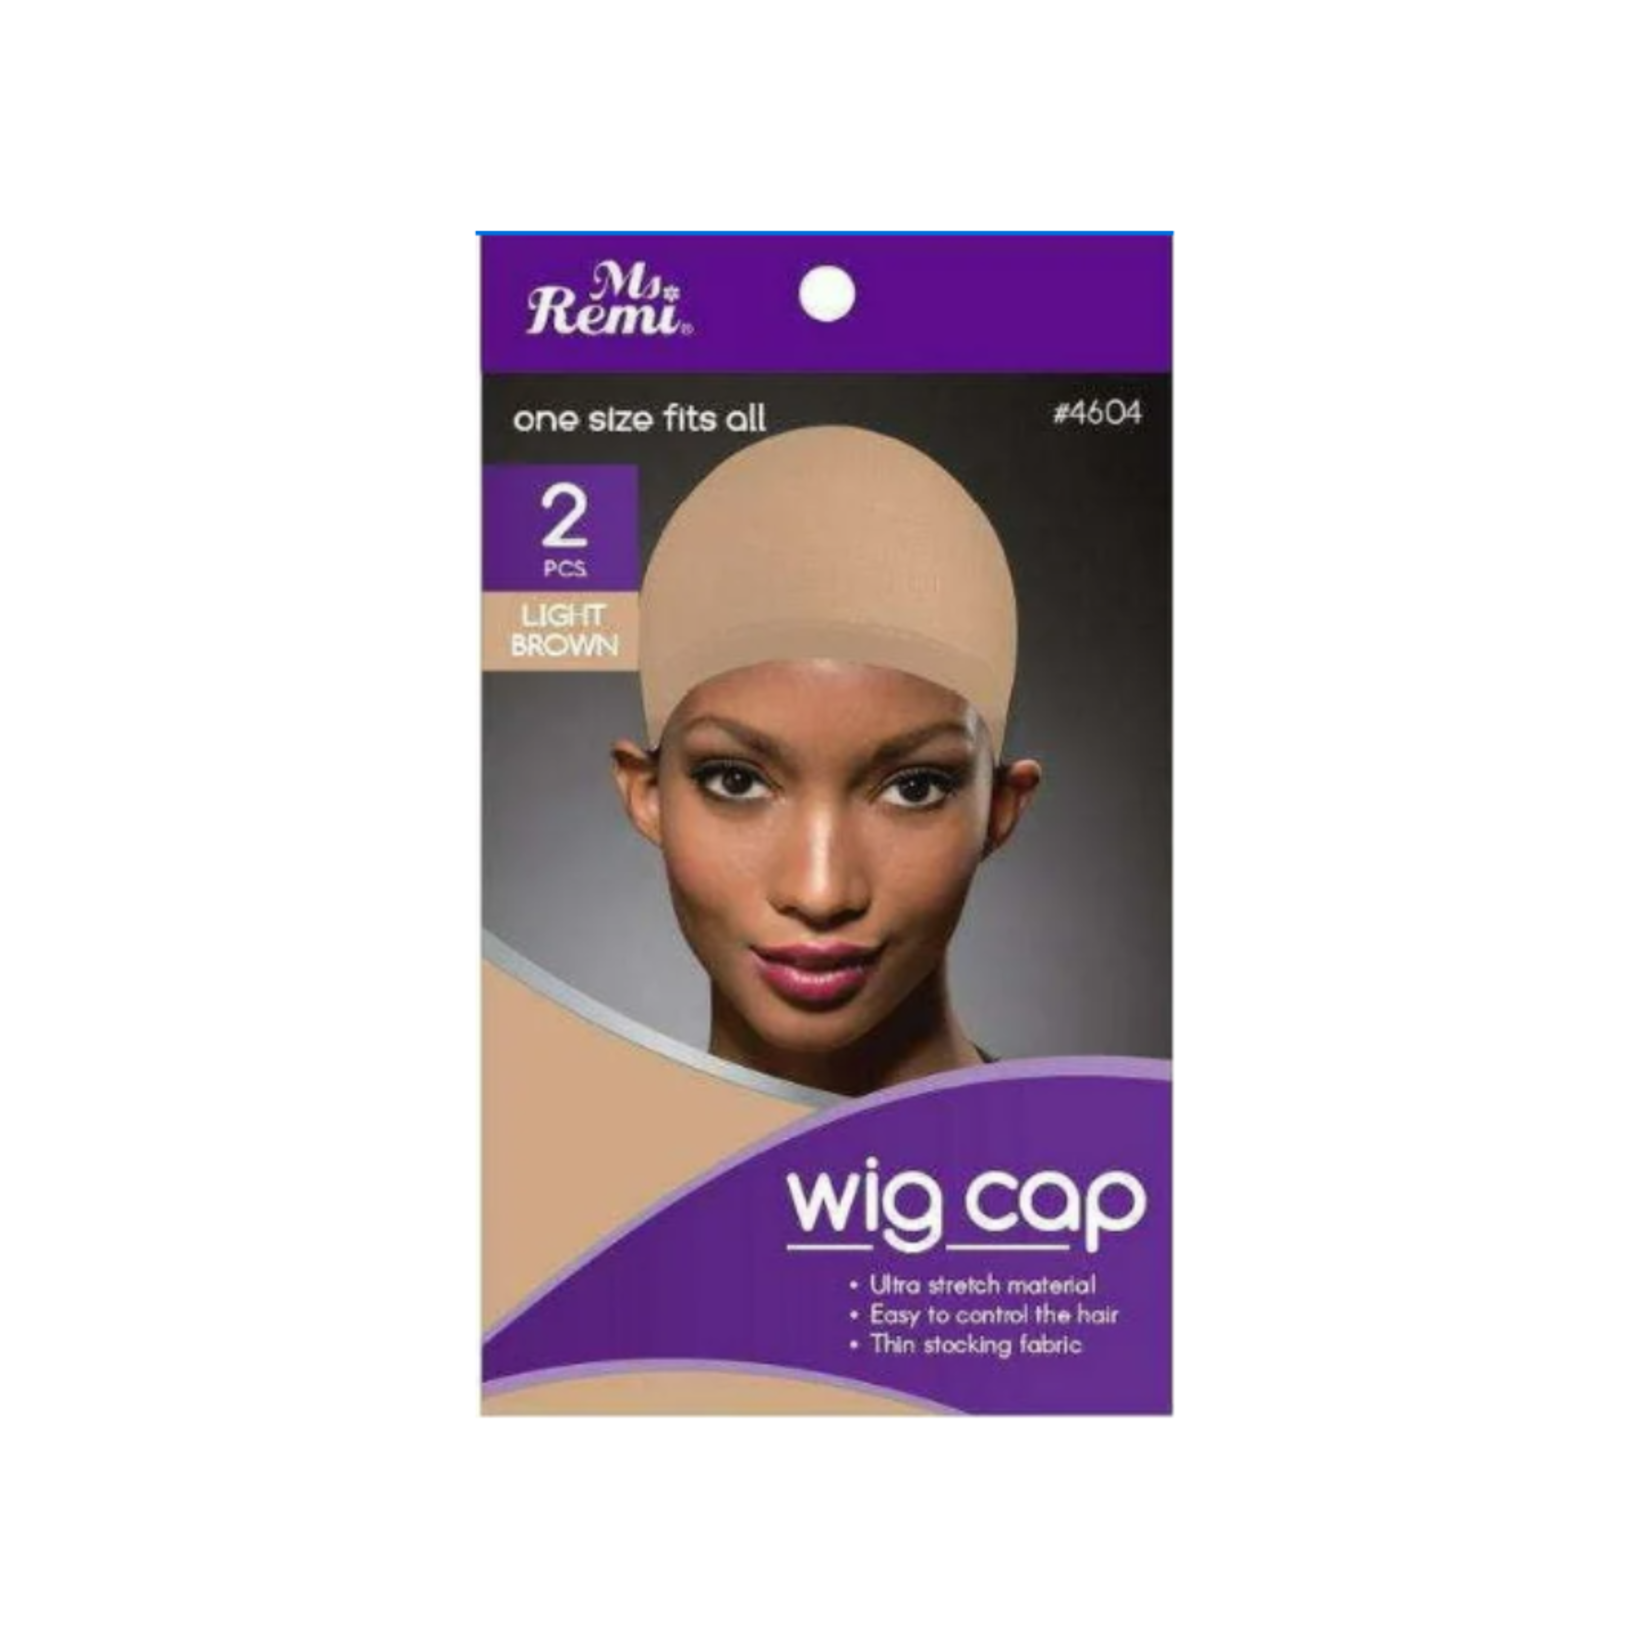 Annie Ms. Remi 2Pcs Light Brown Stocking Wig Cap